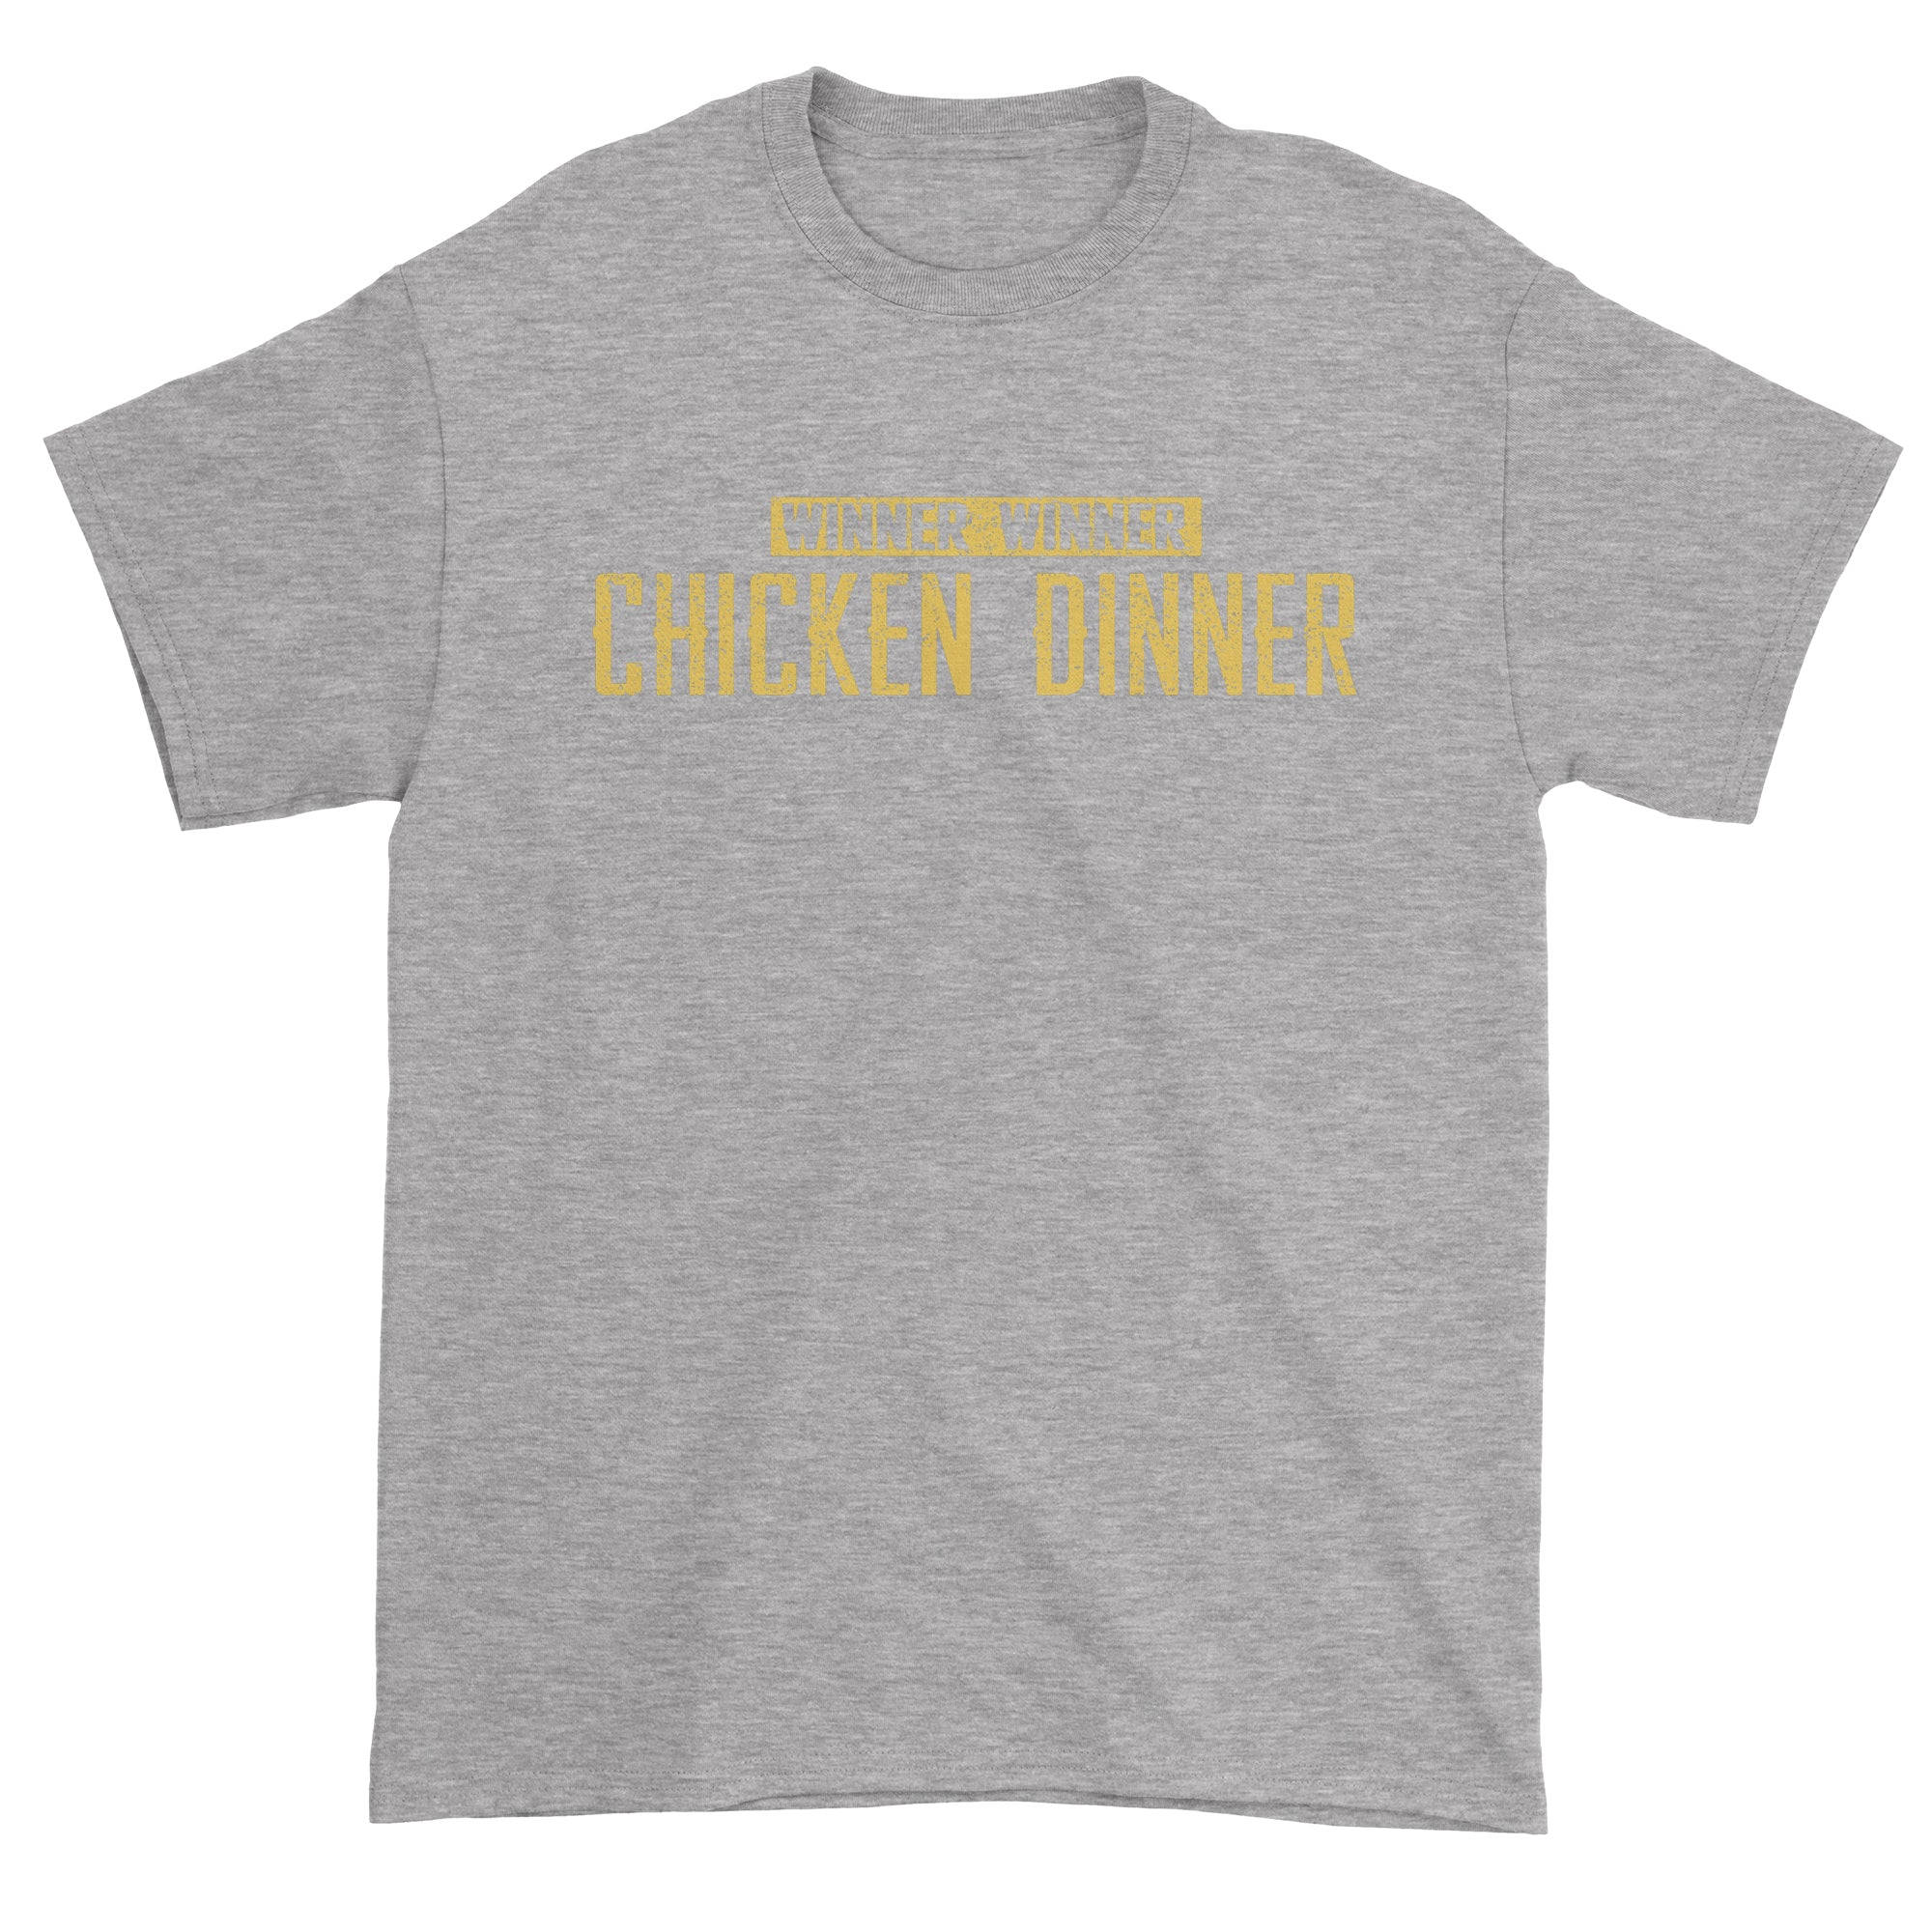 Winner Winner Chicken Dinner Battlegrounds Gamer Men's T-Shirt